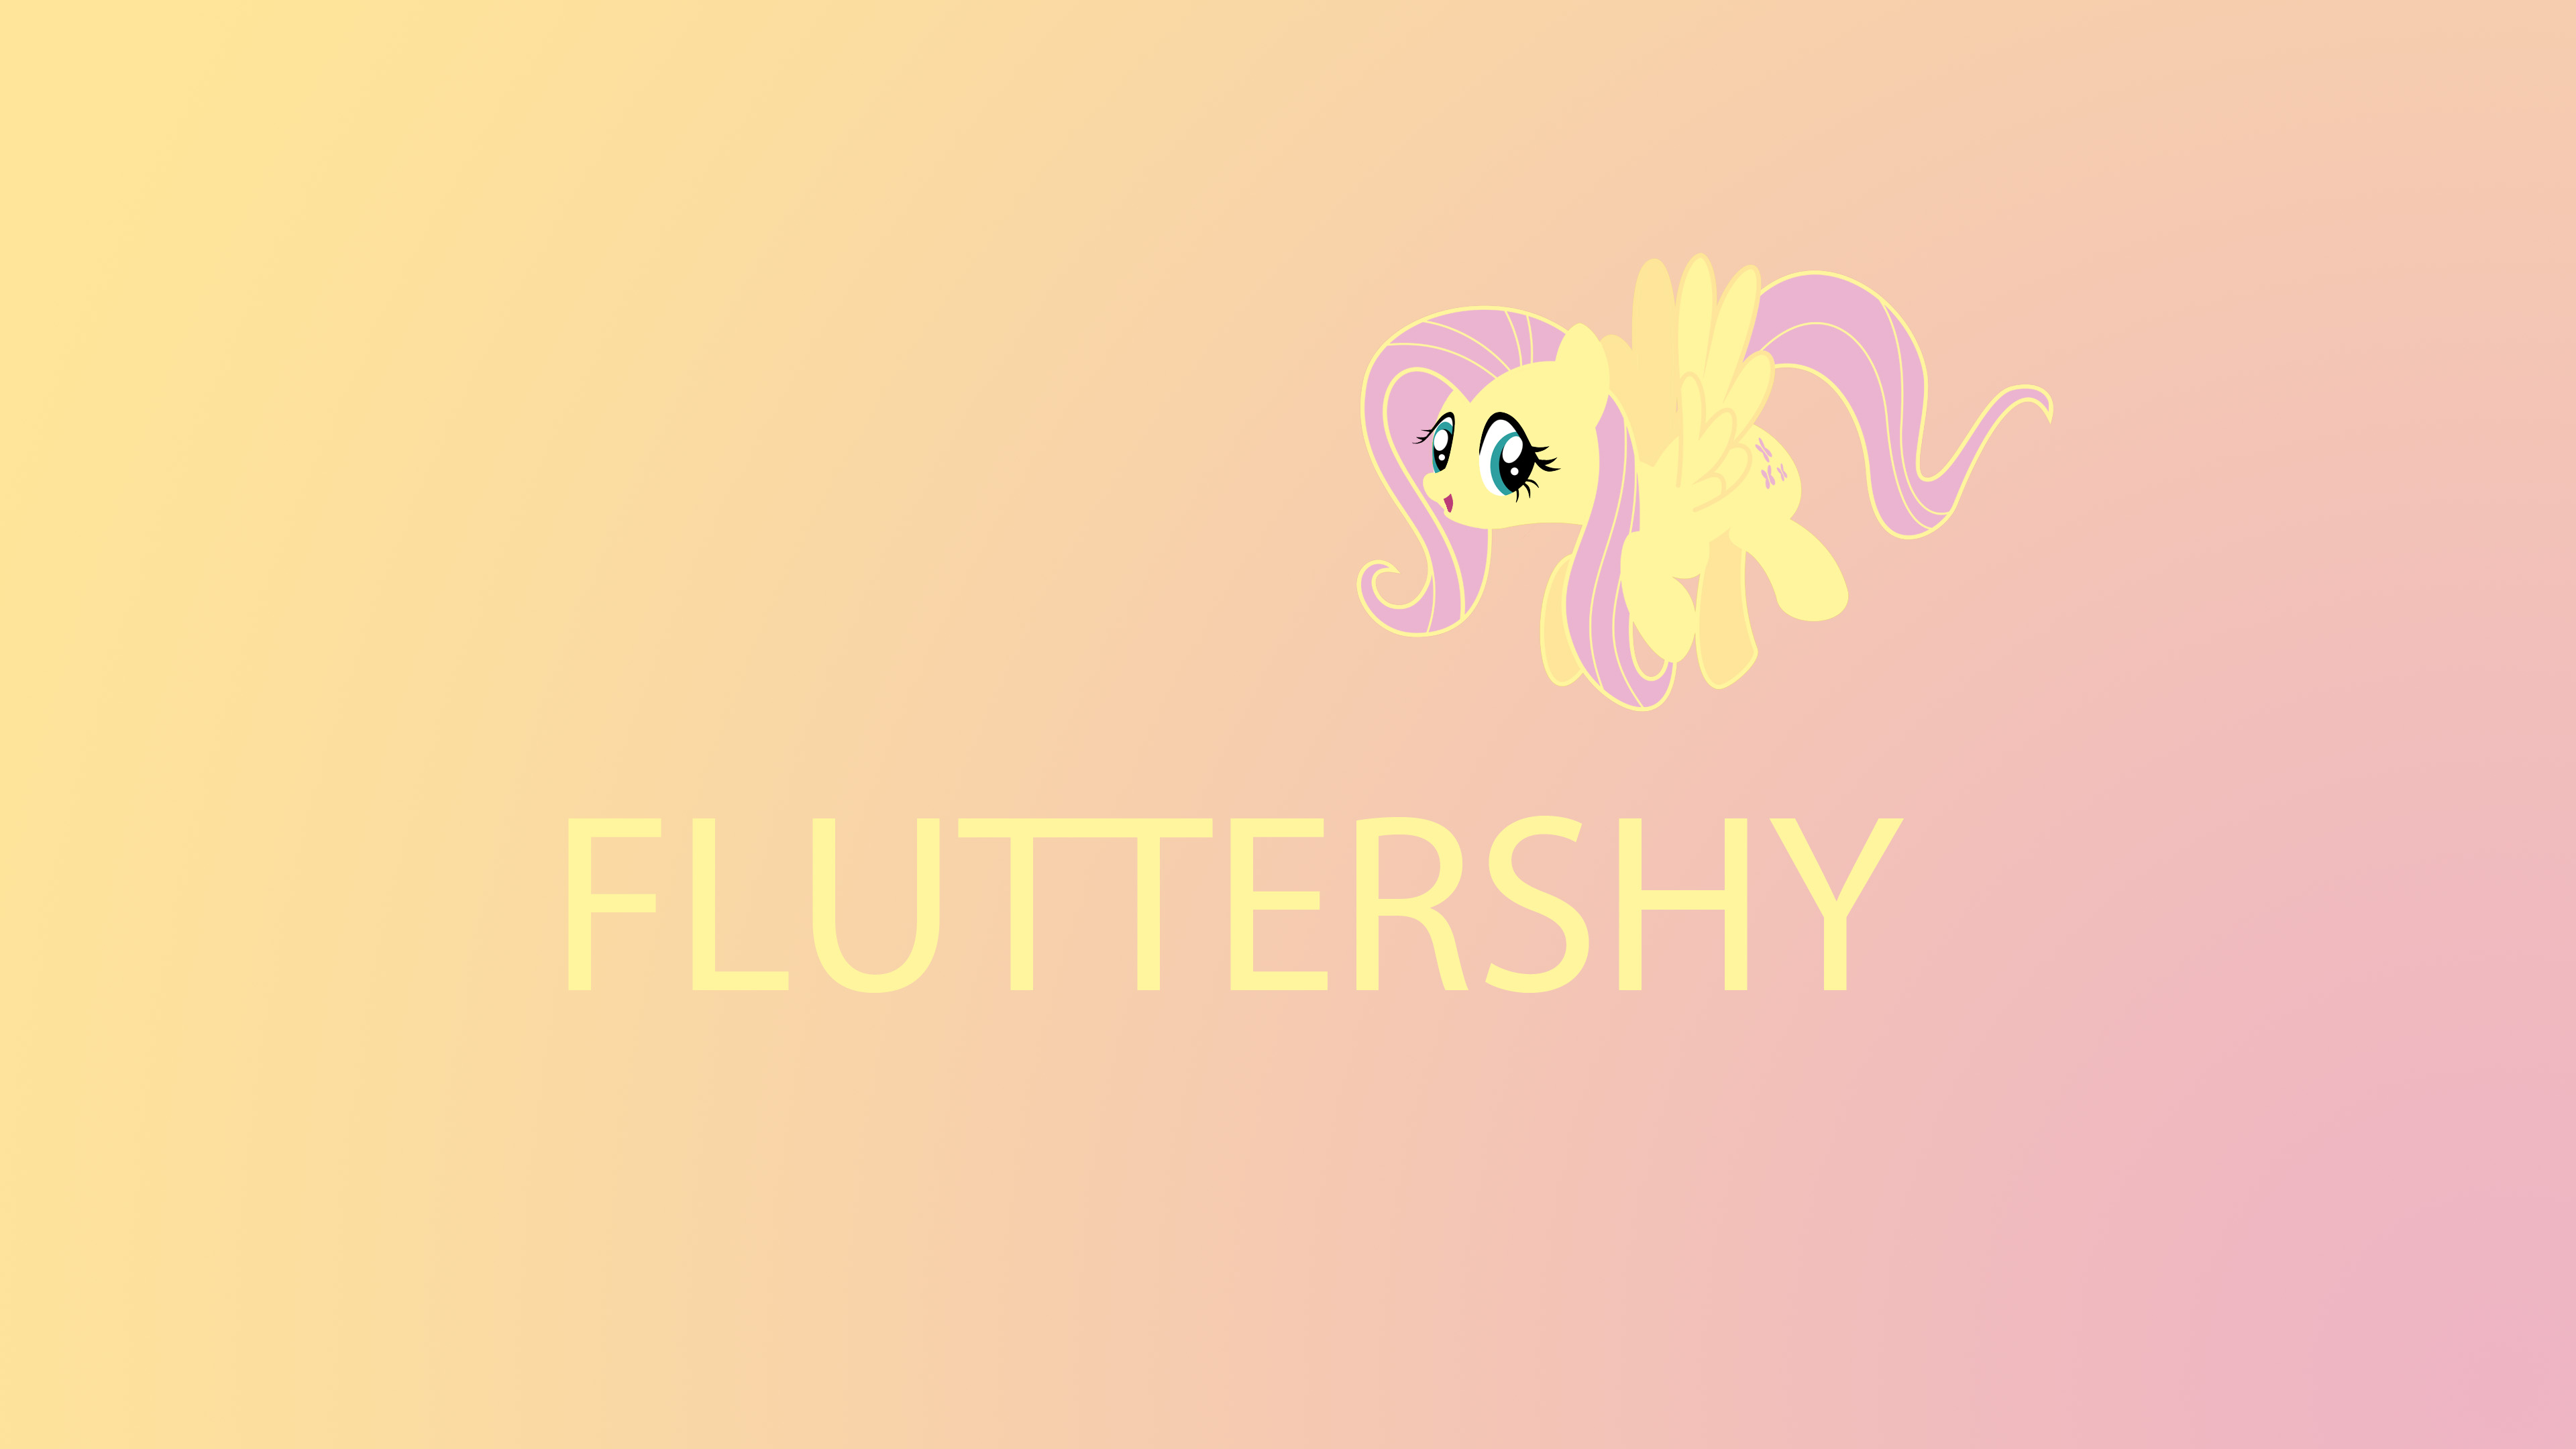 Fluttershy - minimalistic wallpaper by DaVca